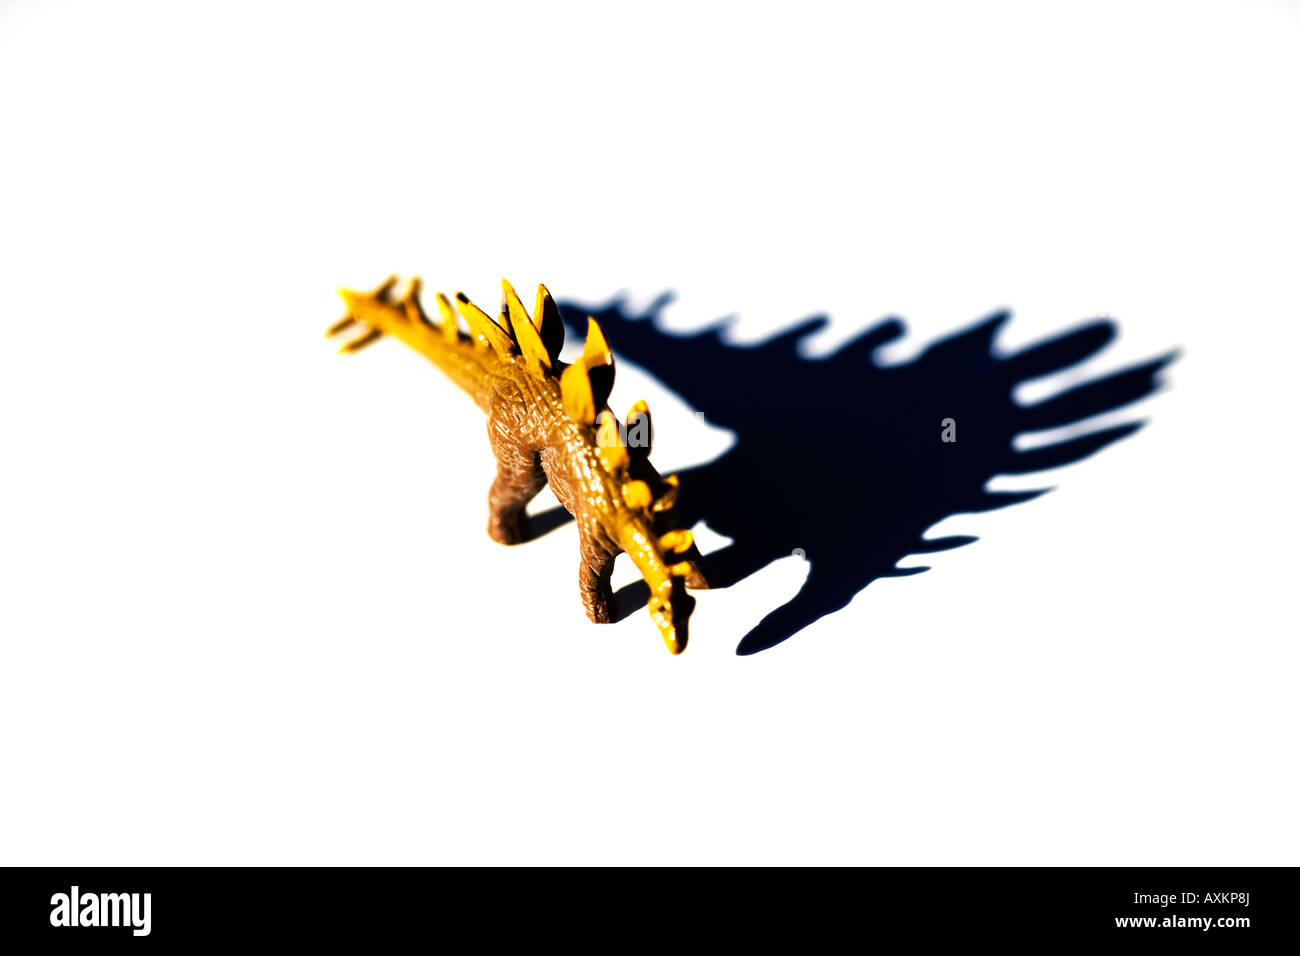 Toy dinosaurs in strong sunlight stegosaur or stegosaurus Stock Photo